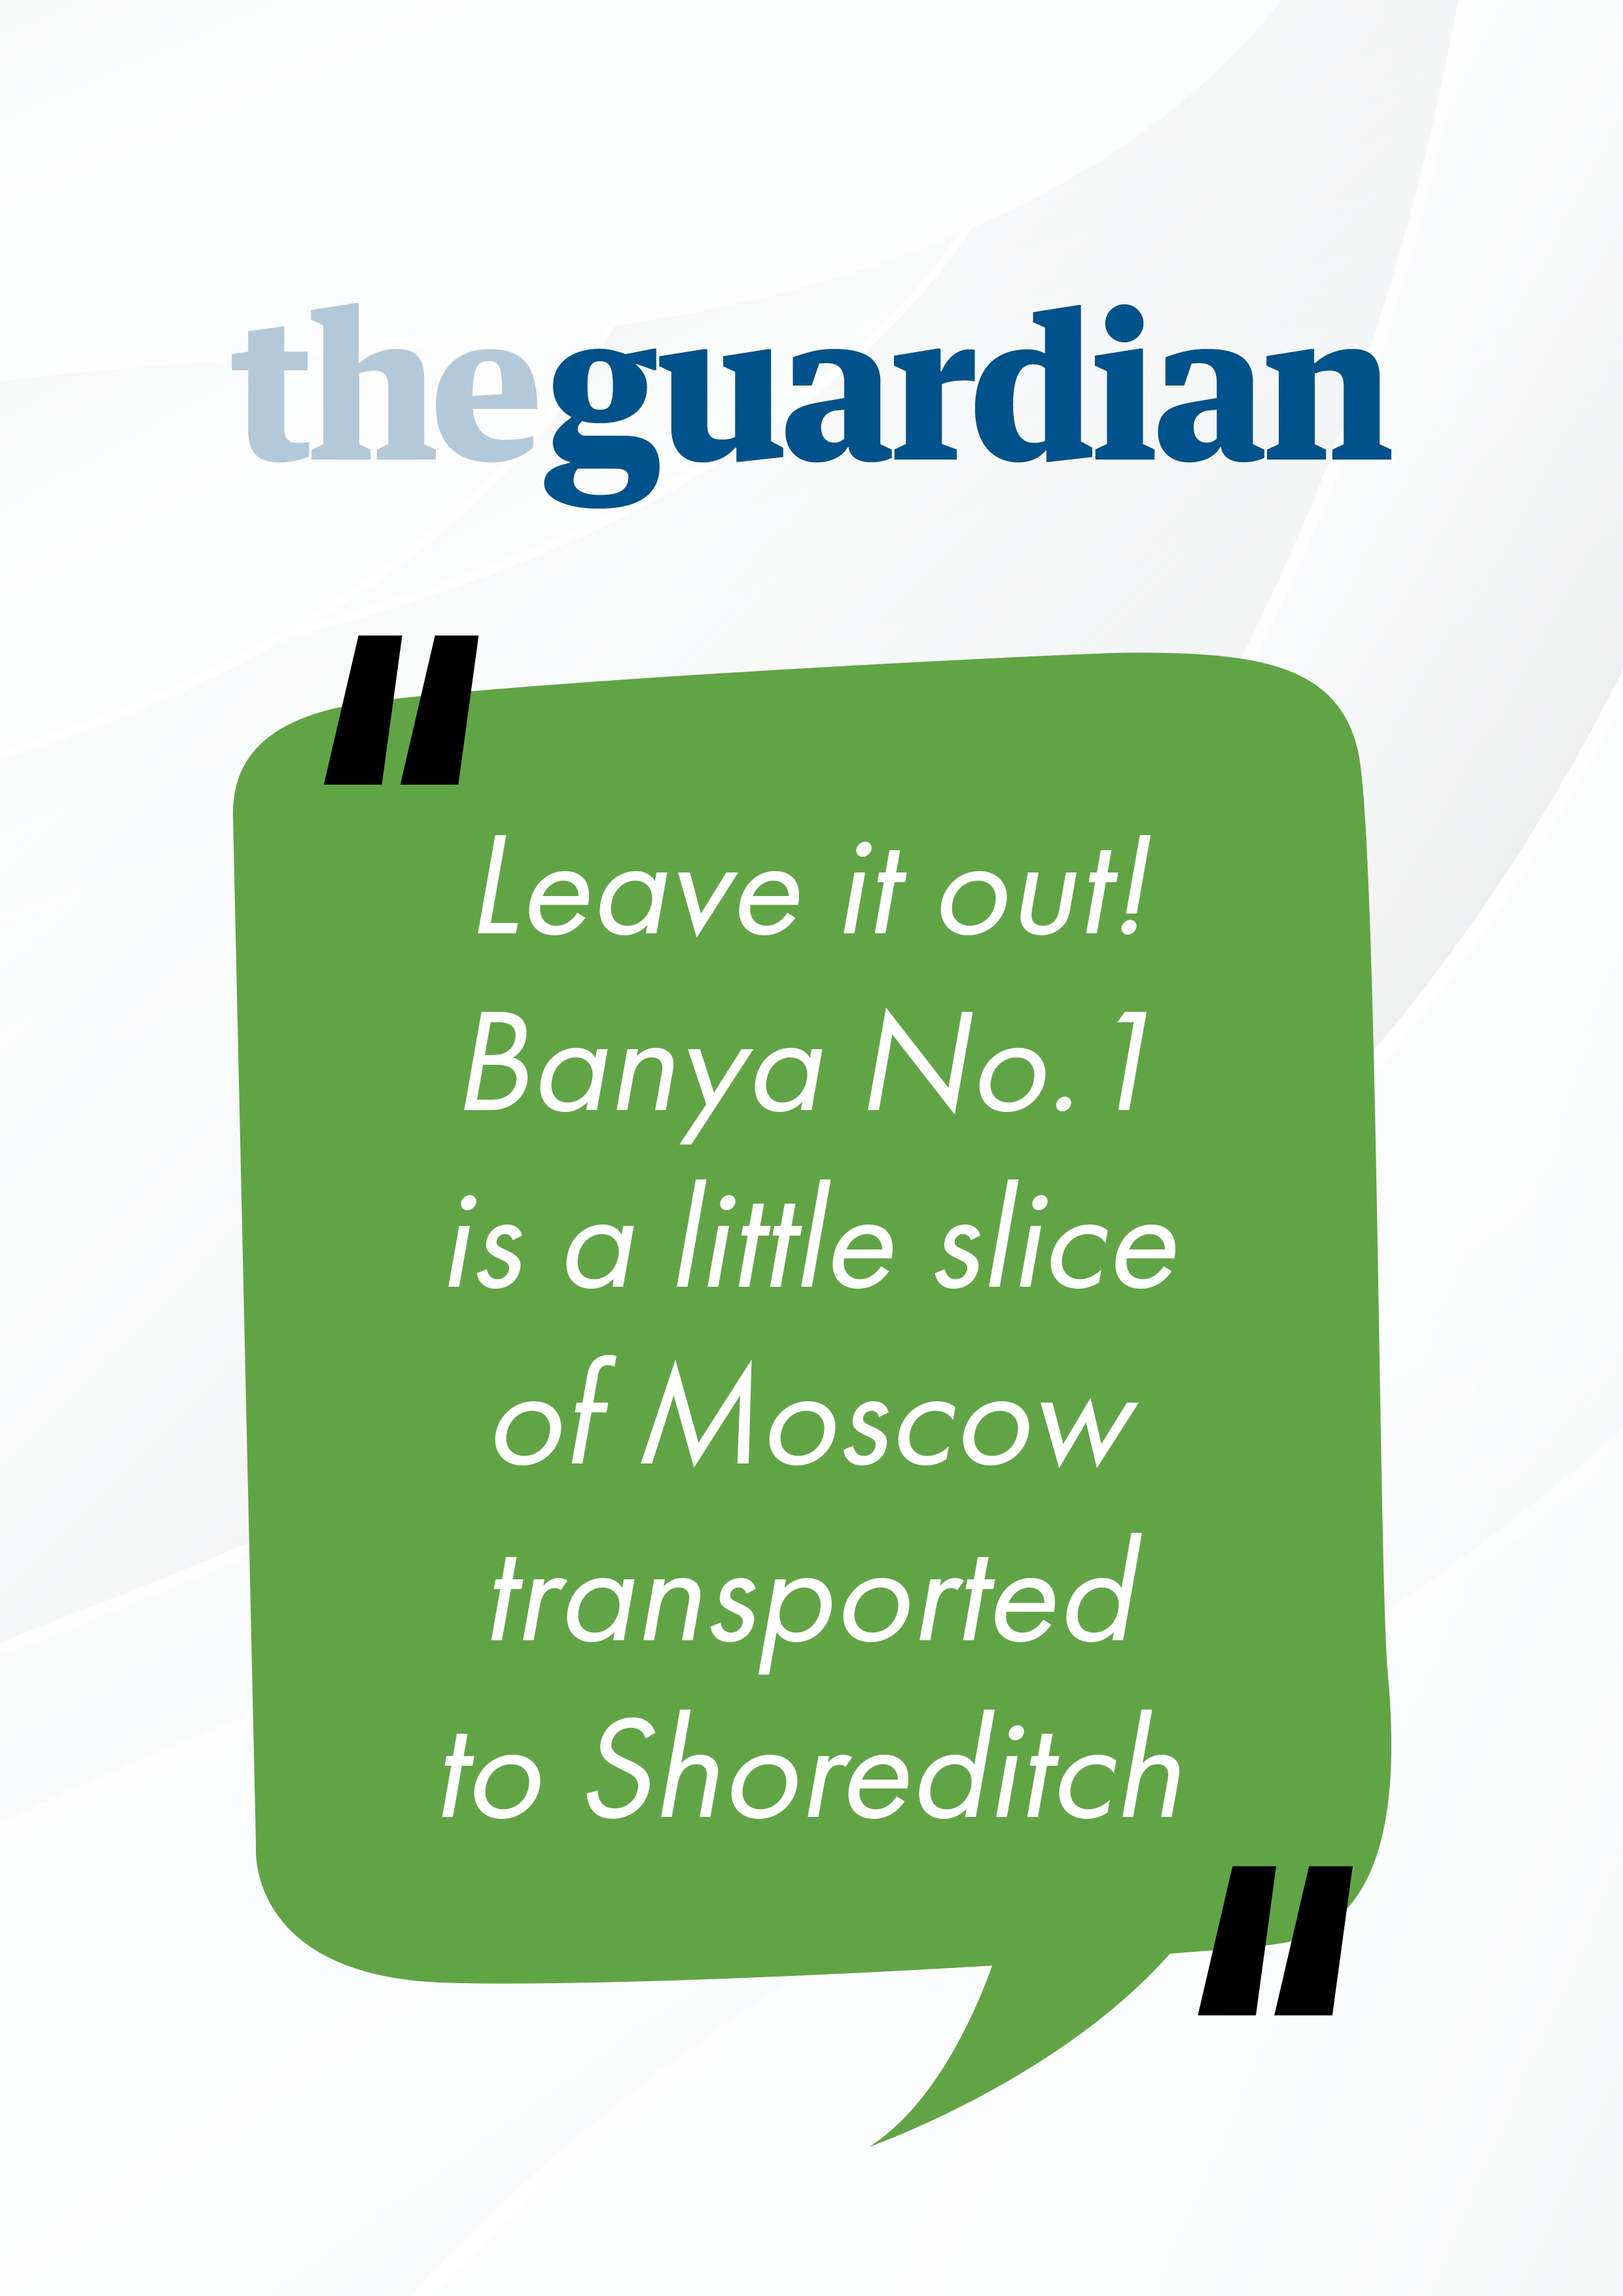 The Guardian about Banya No.1